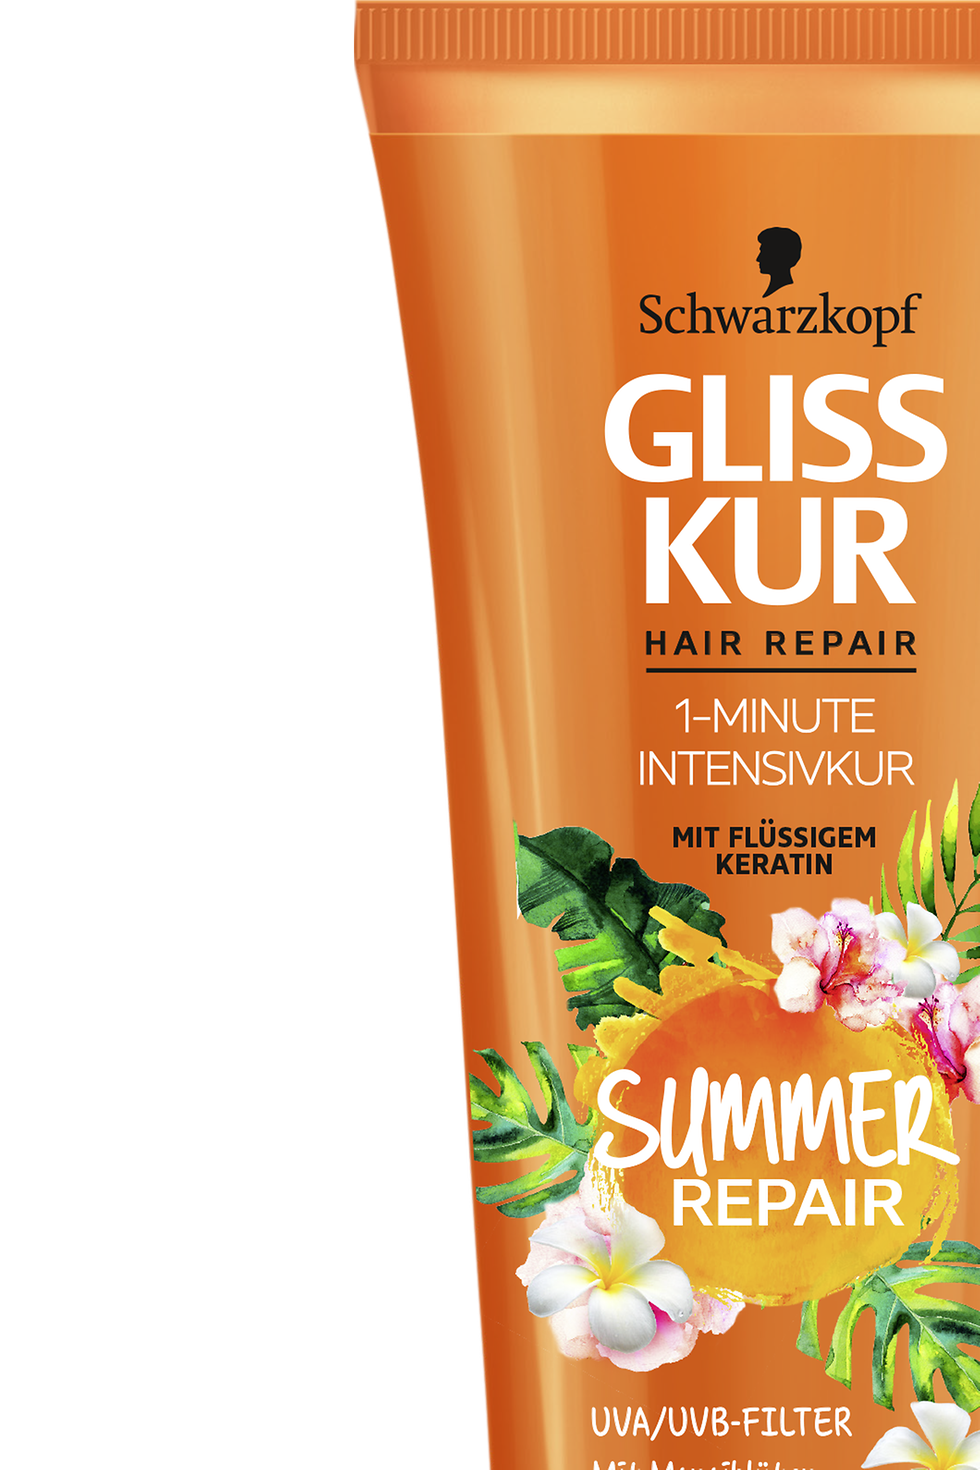 Gliss Kur Summer Repair 1-Minute Intensivkur